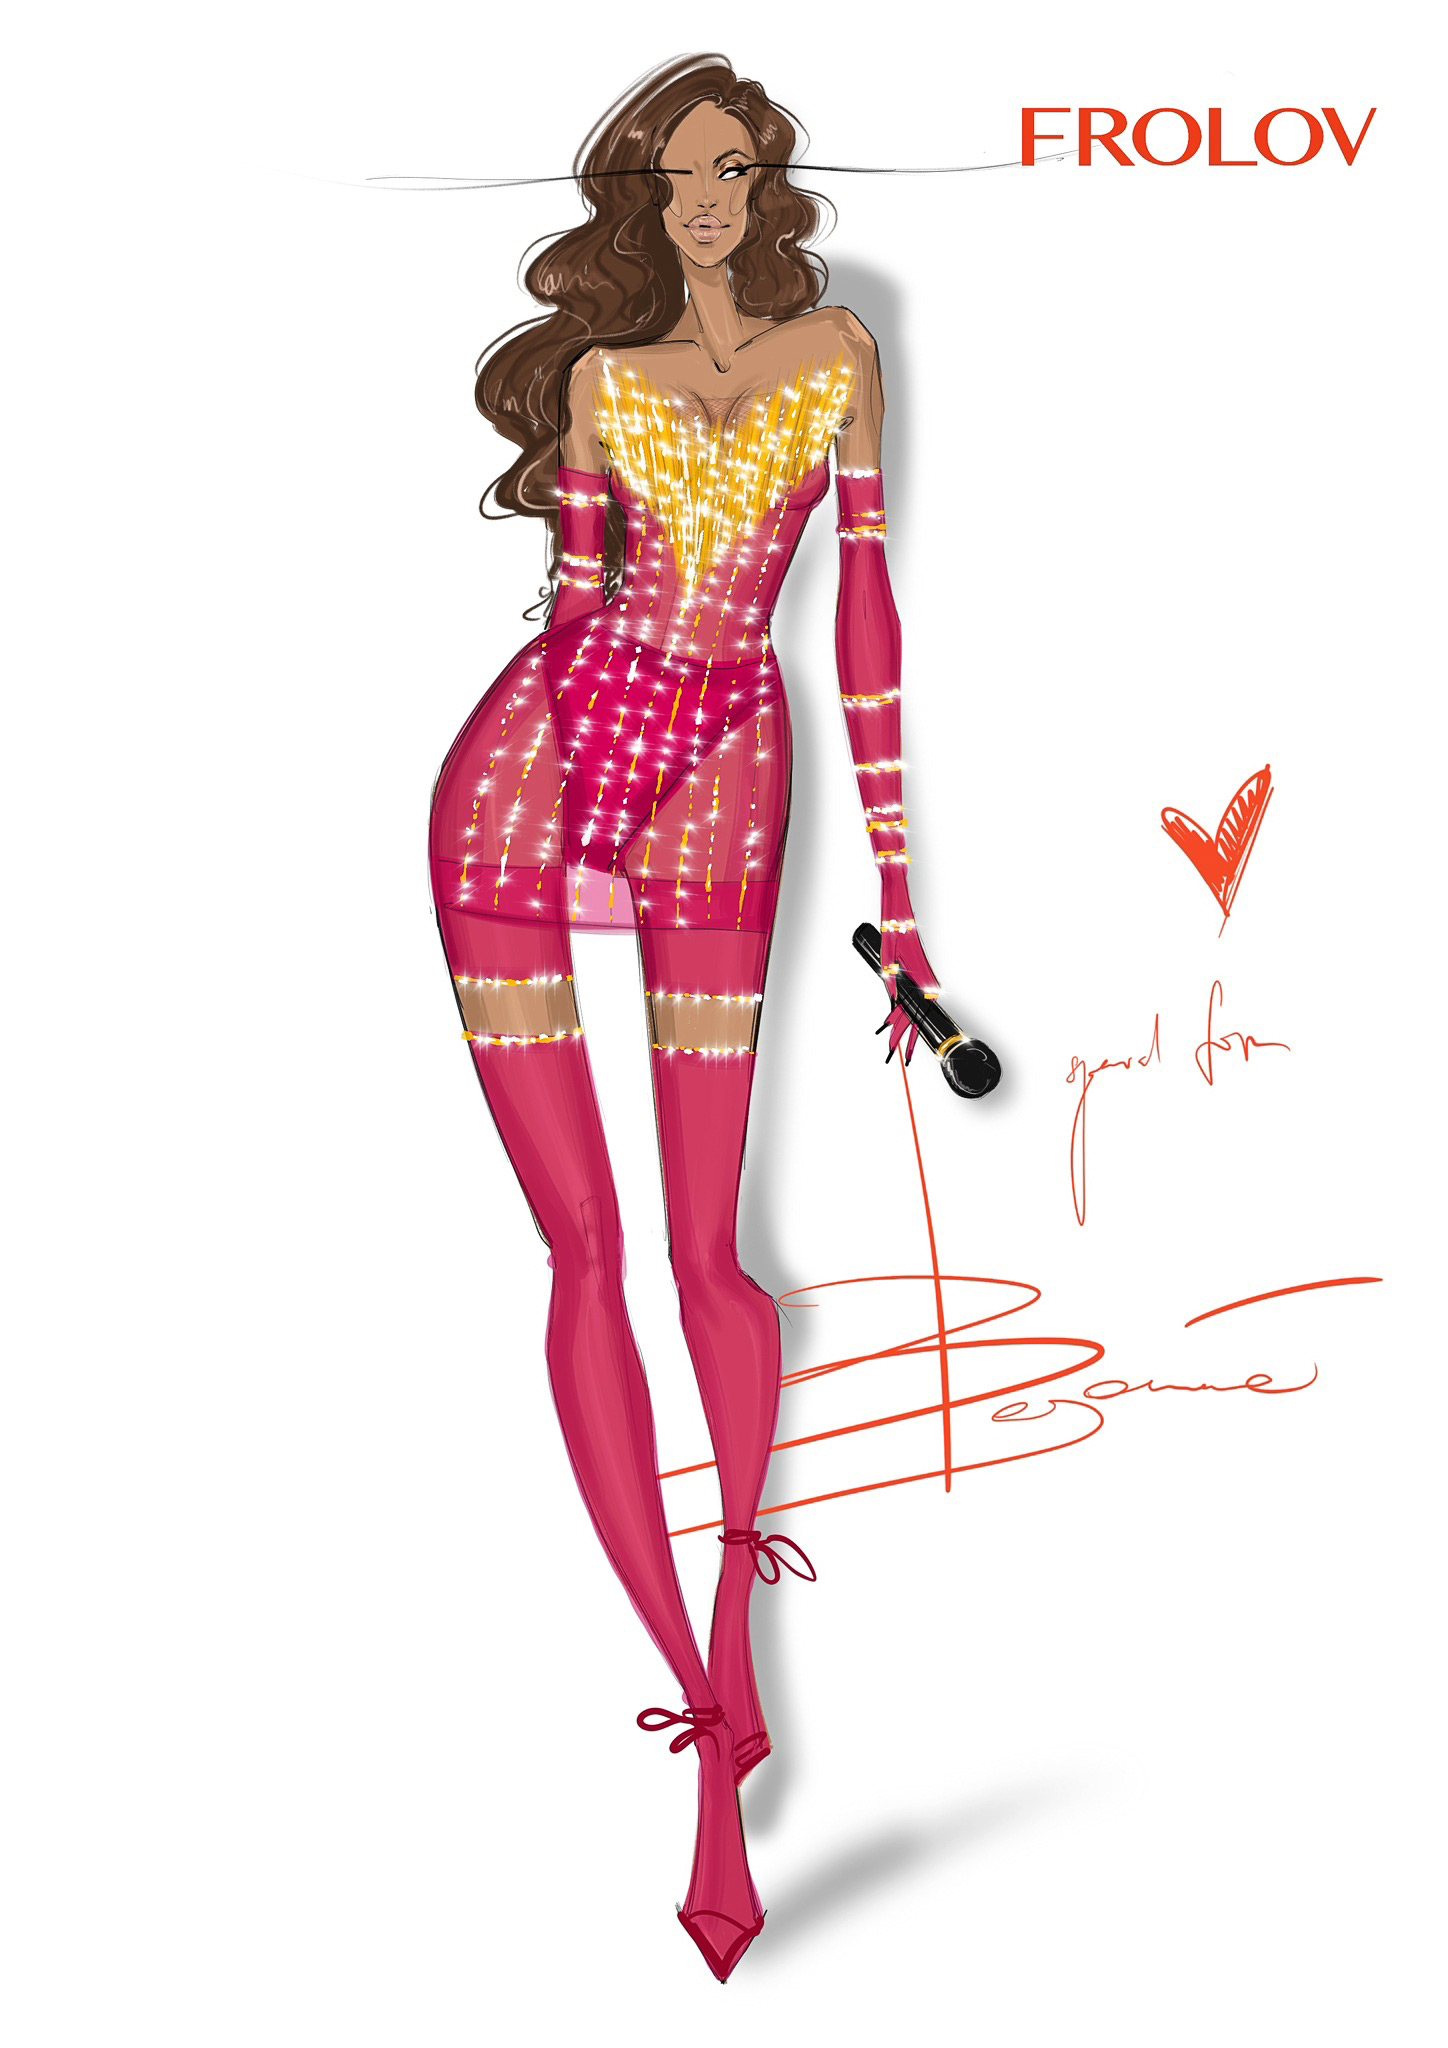 Beyonce Sparkled in a Ukrainian-Designed Corset During Dubai Concert ...